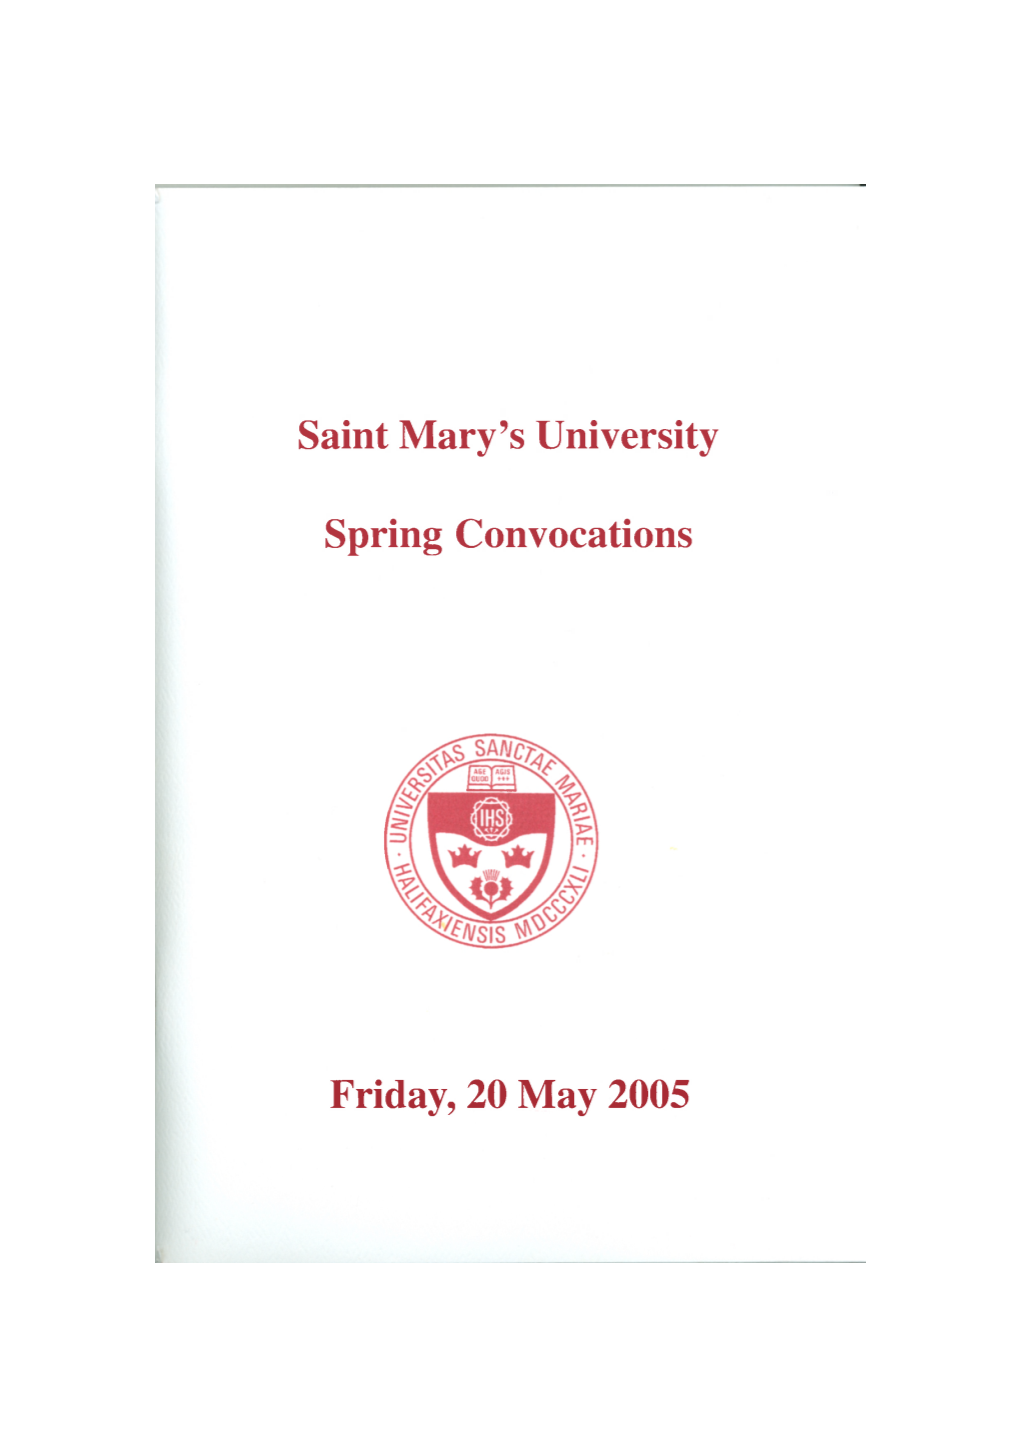 Saint Mary's University Spring Convocations Friday, 20 May 2005